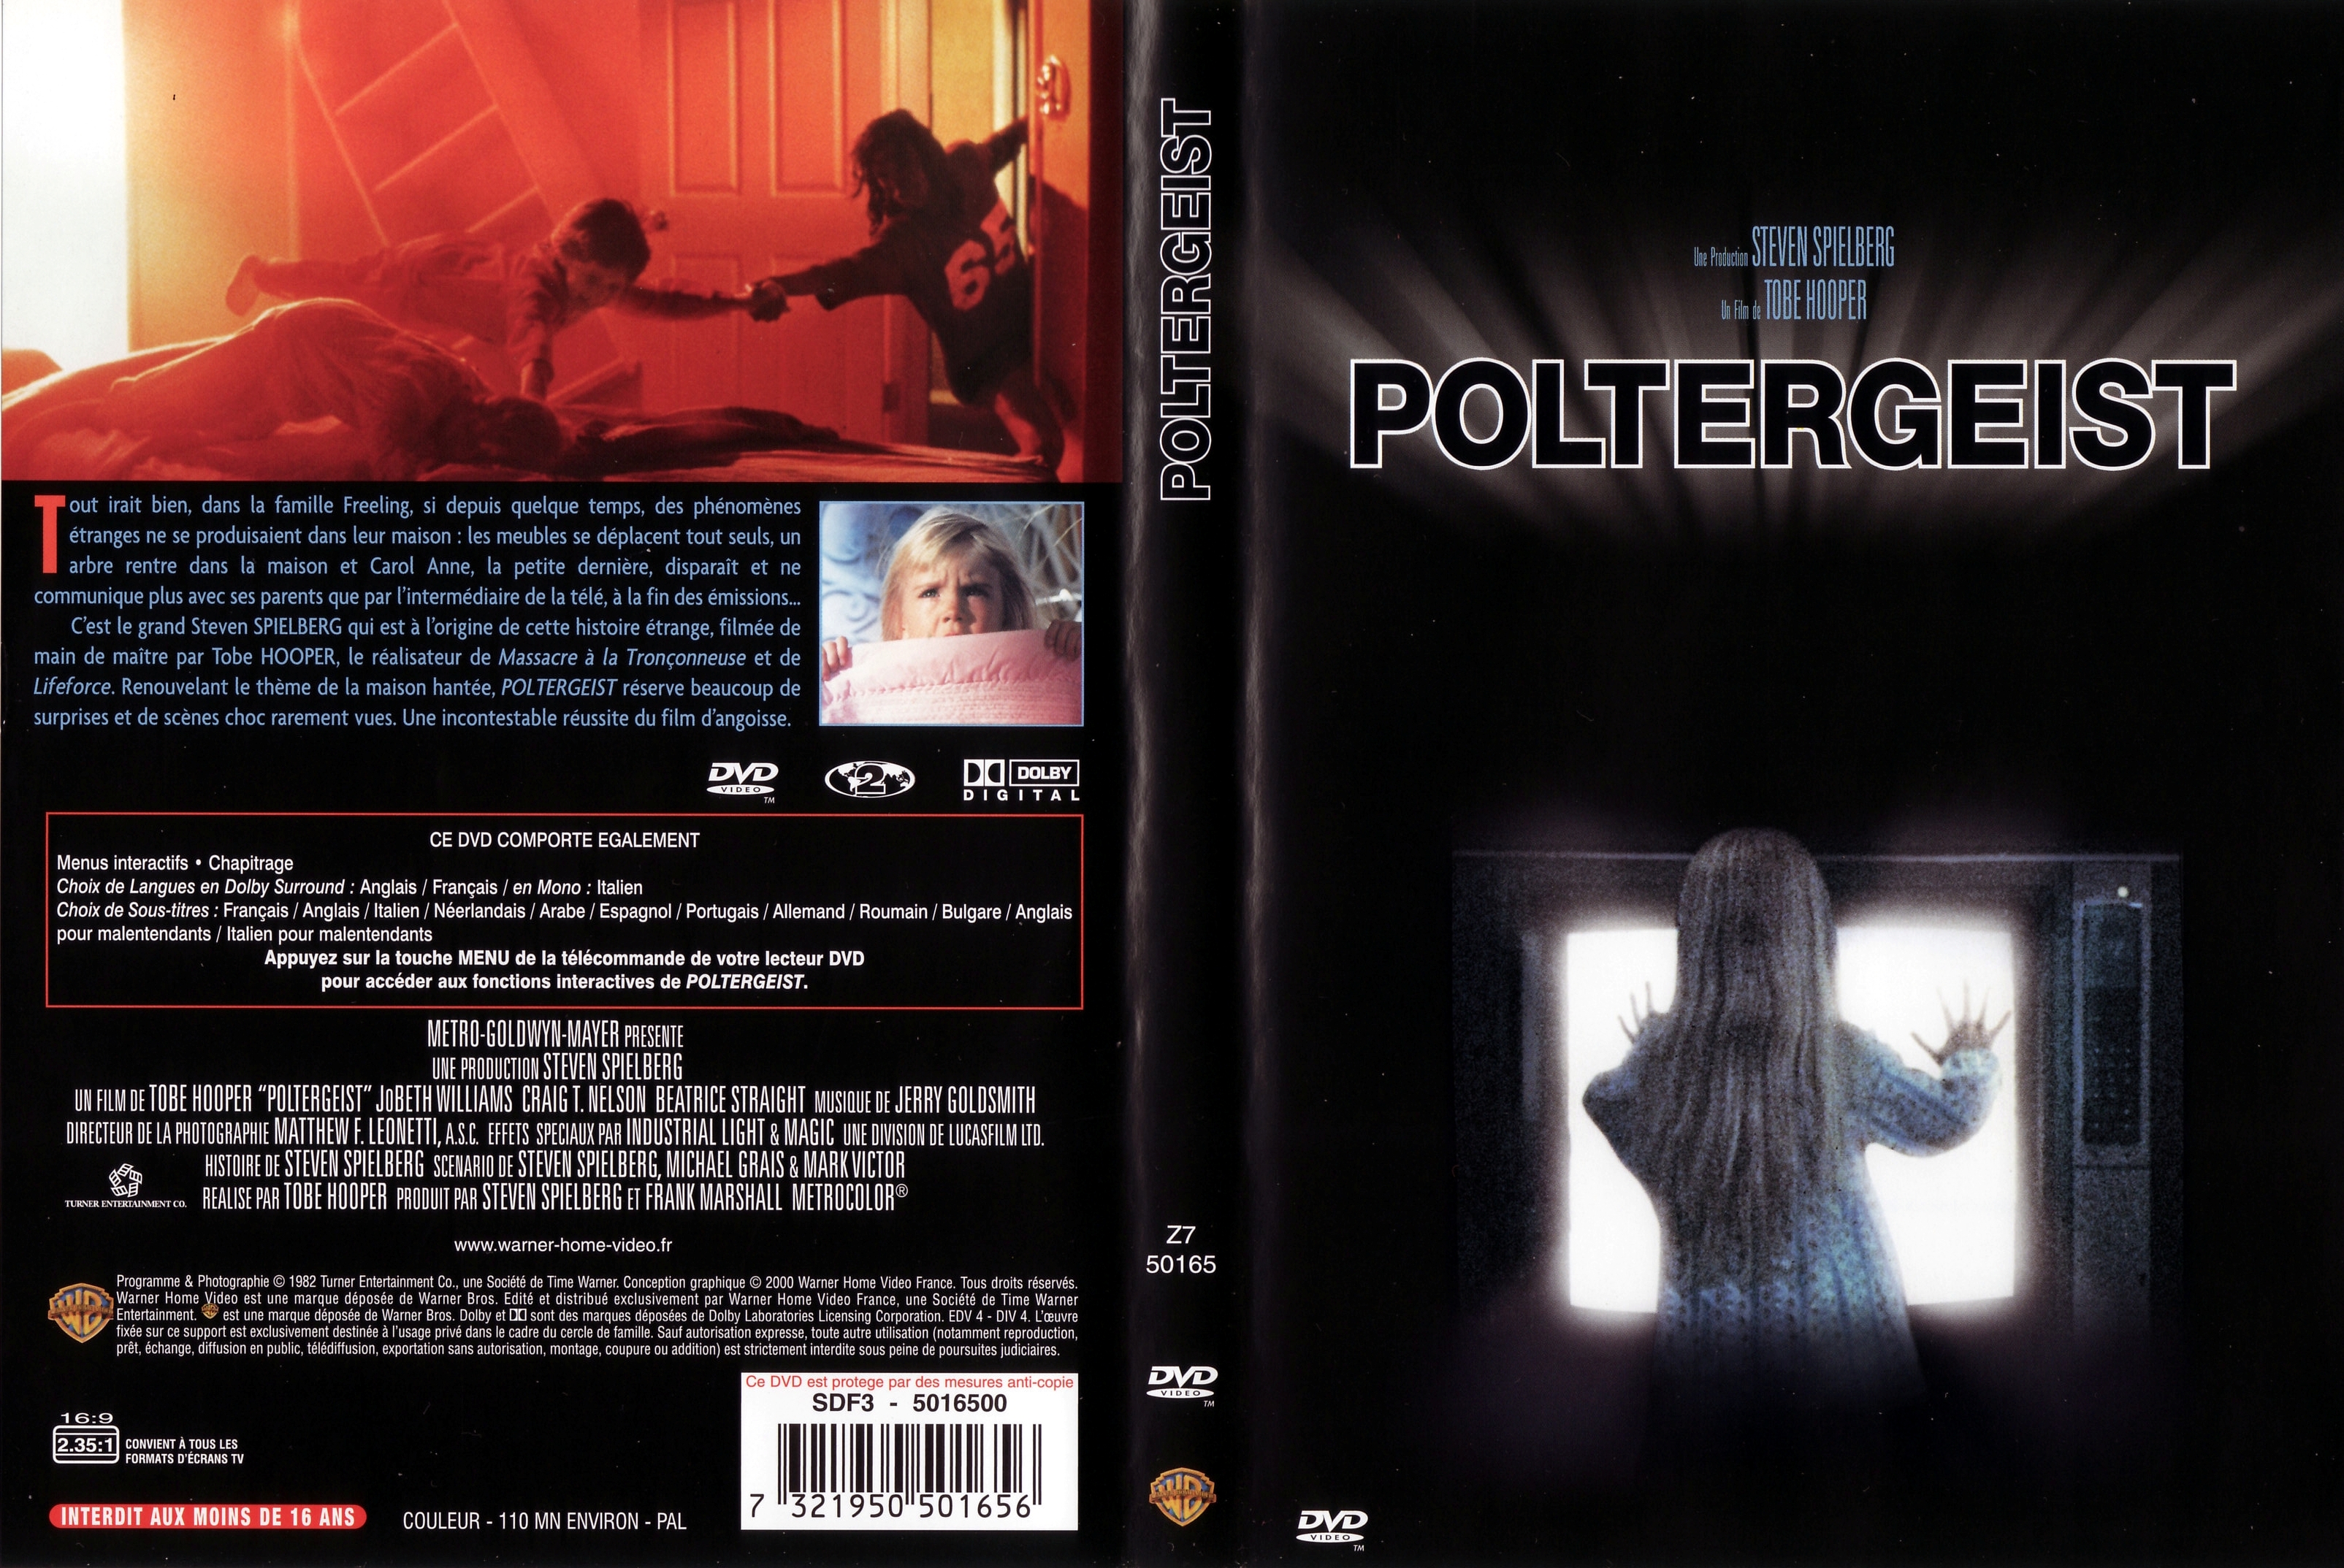 Jaquette DVD Poltergeist v3